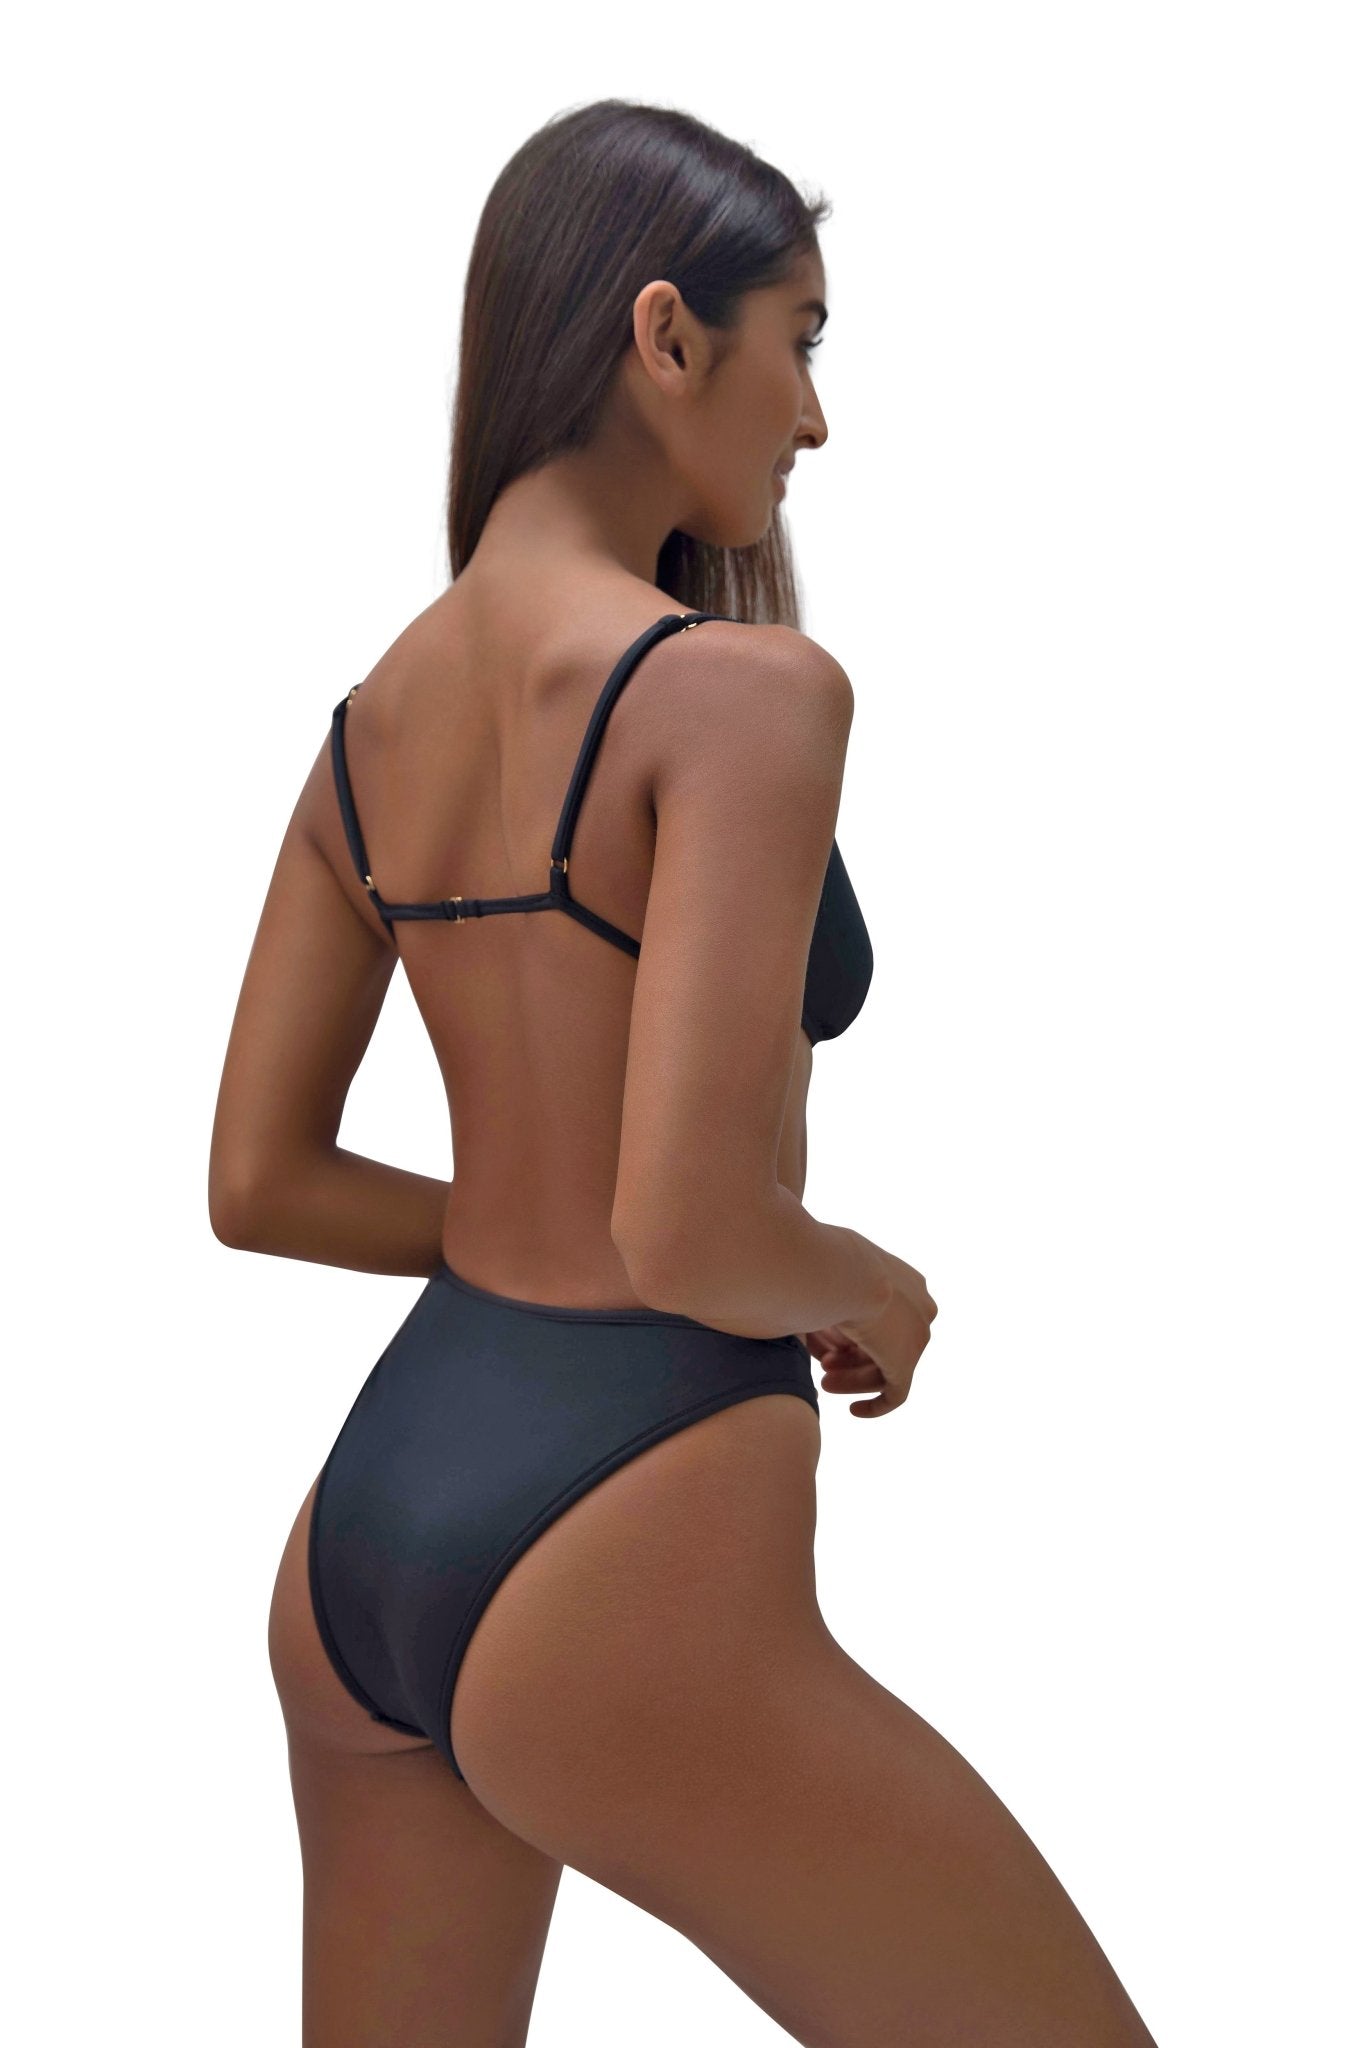 KYA Tessa Reversible Swim Top - Minty / Black - Destination PSP